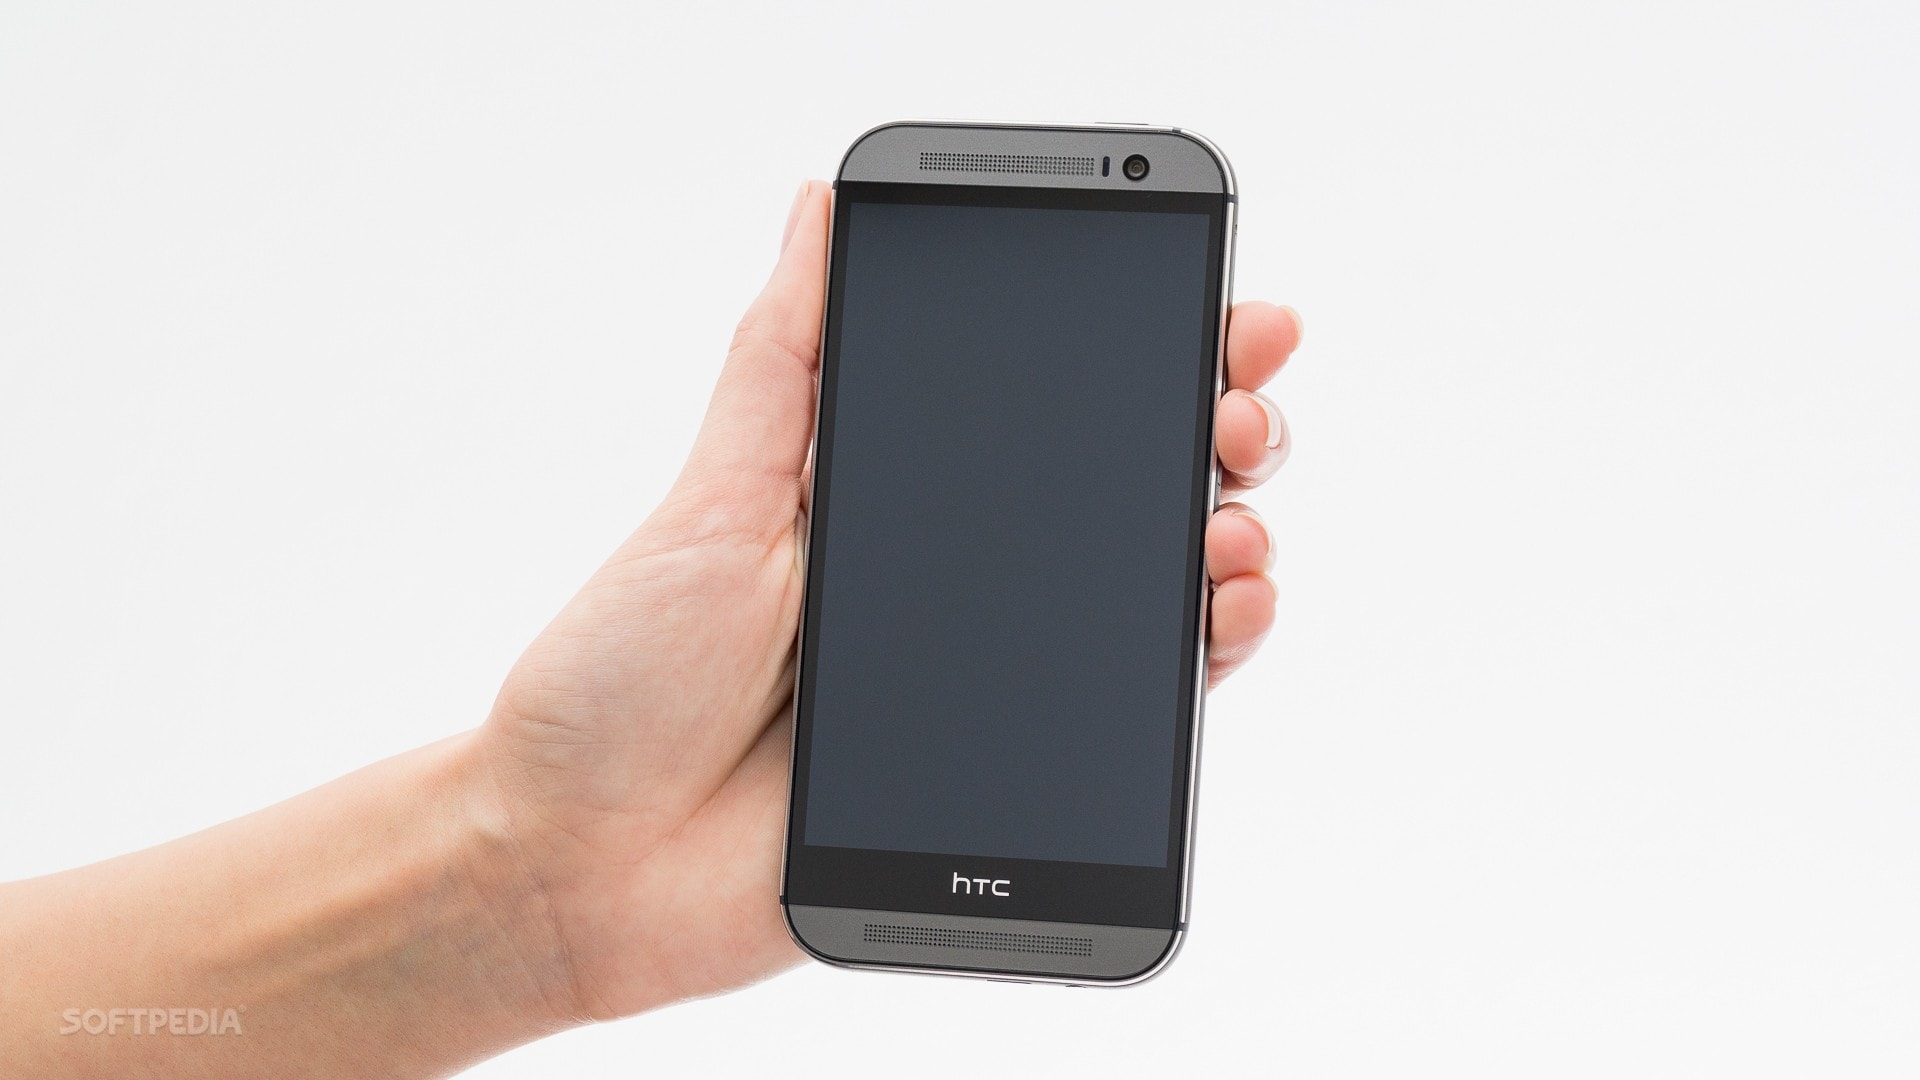 مواصفات هاتف htc m9 صاحب الاسم الرمزى HTC Hima